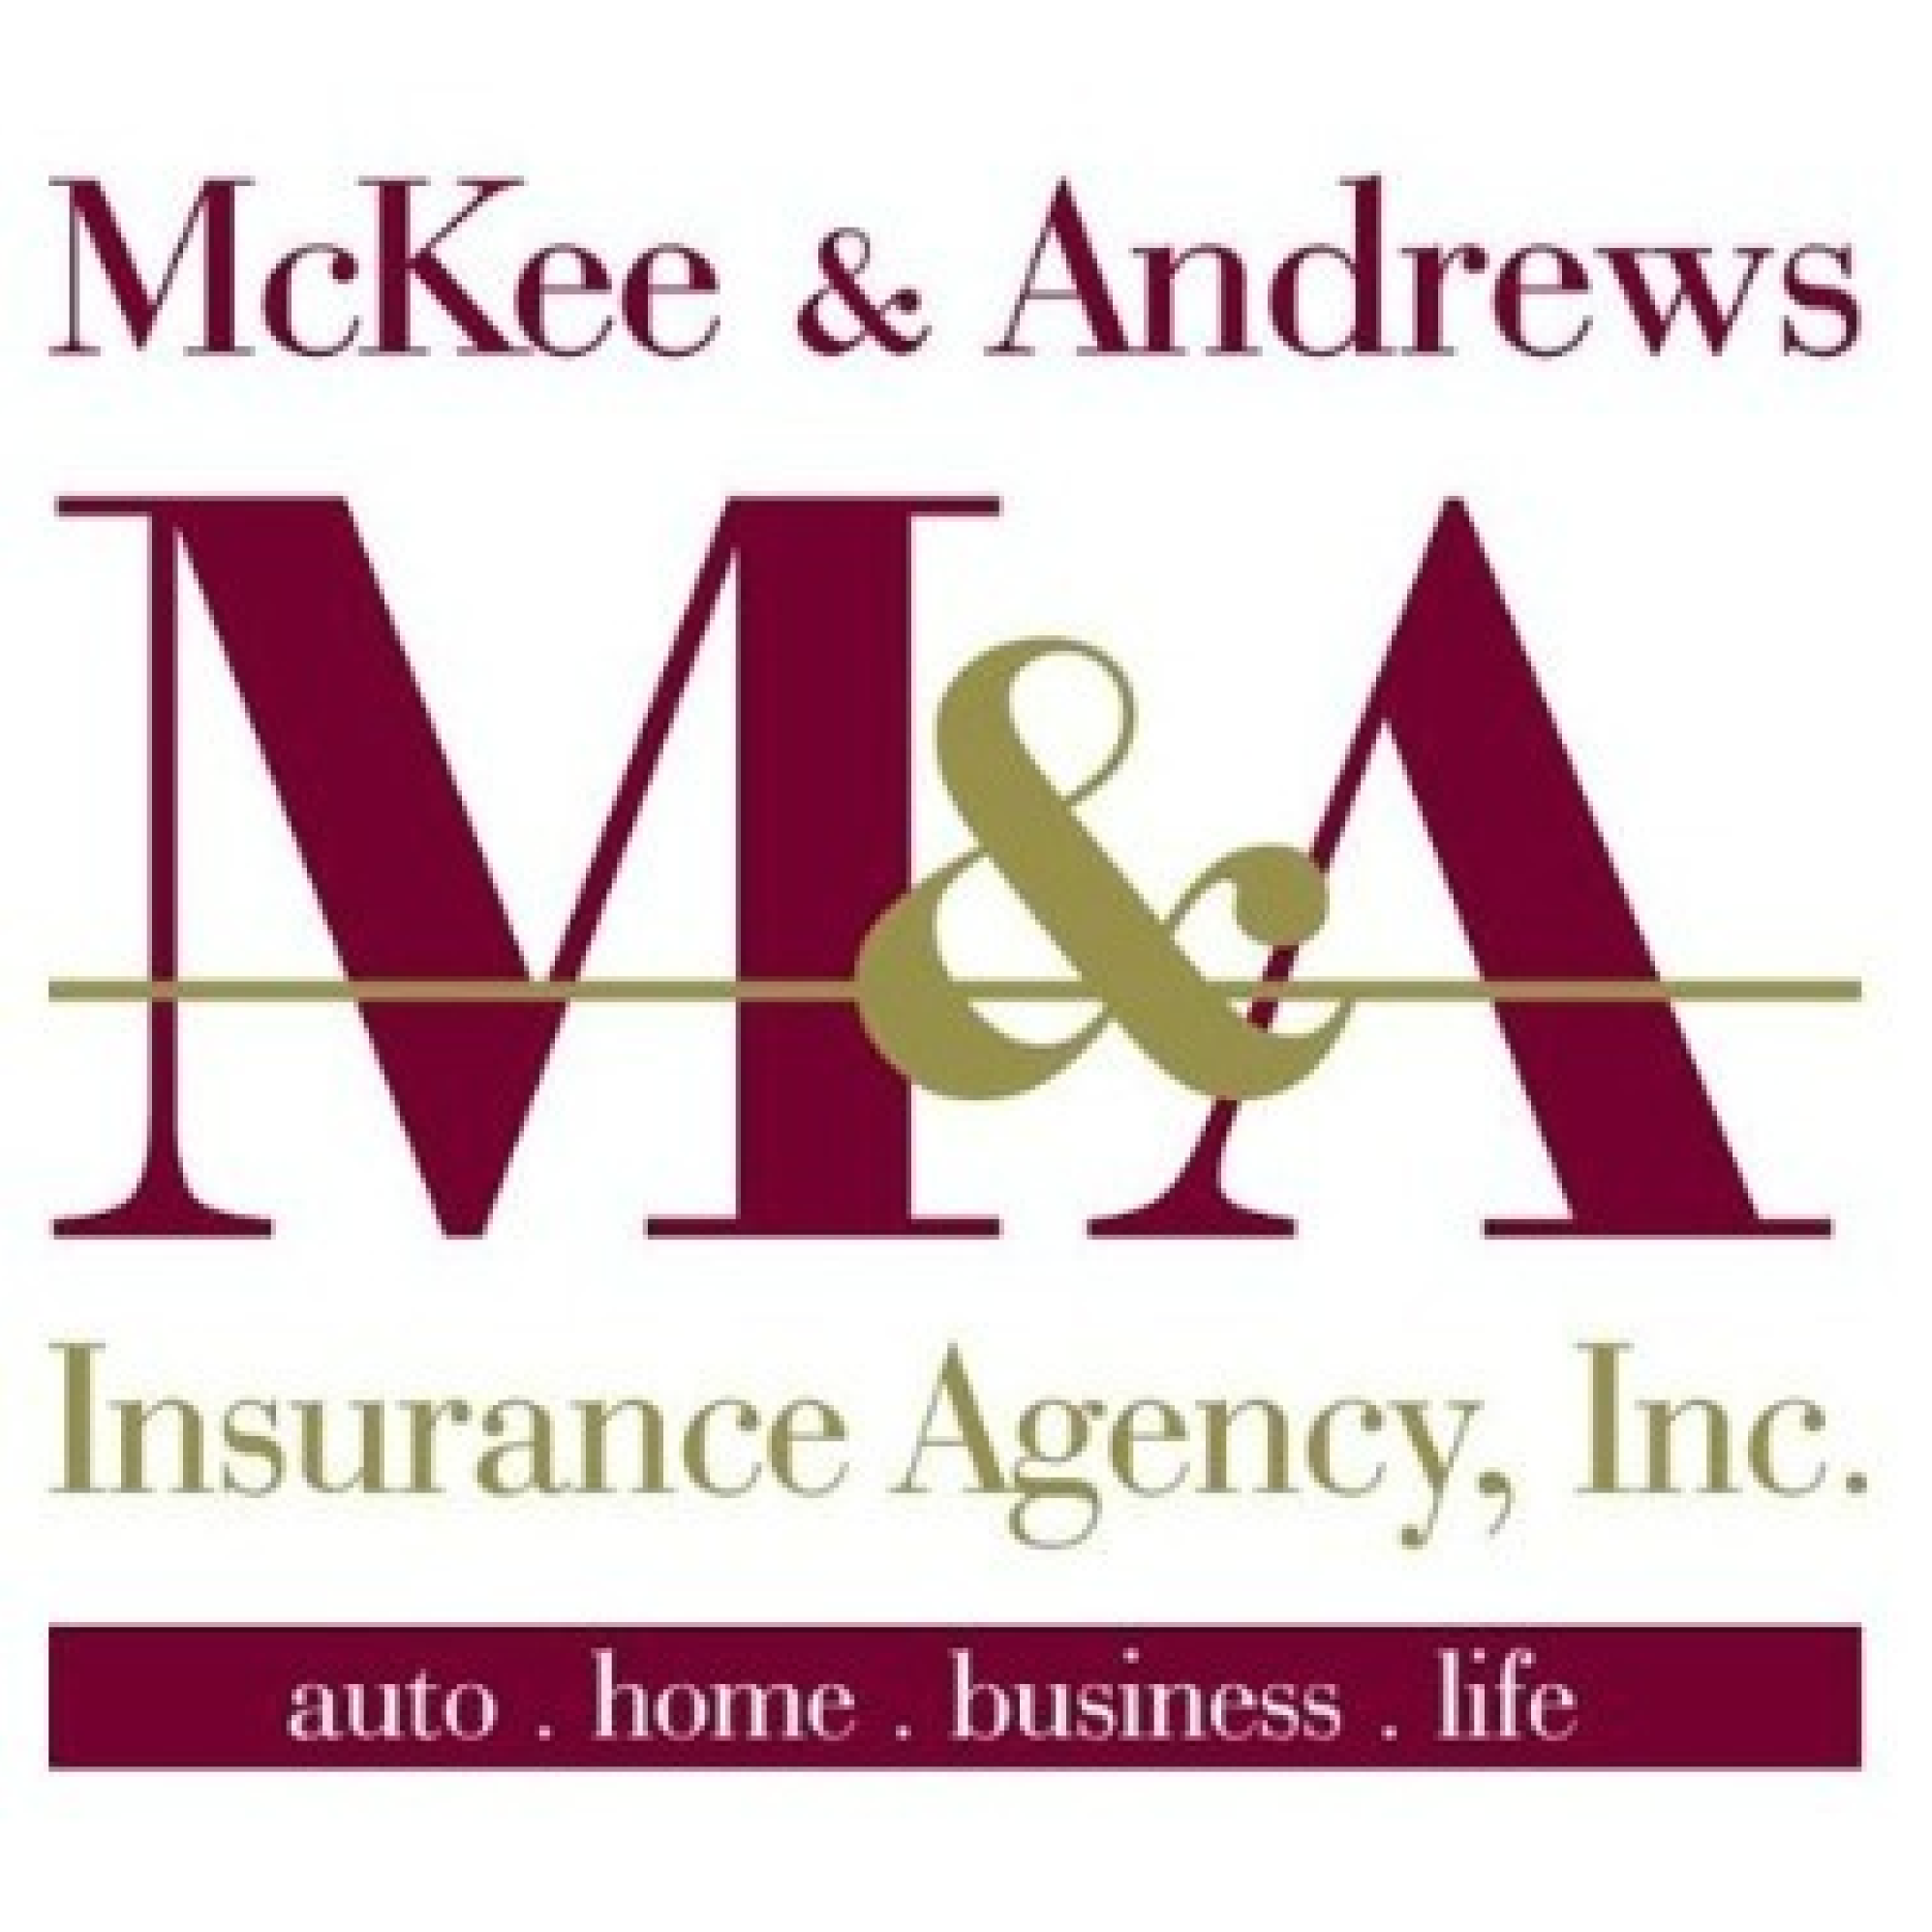 McKee & Andrews Insurance Agency